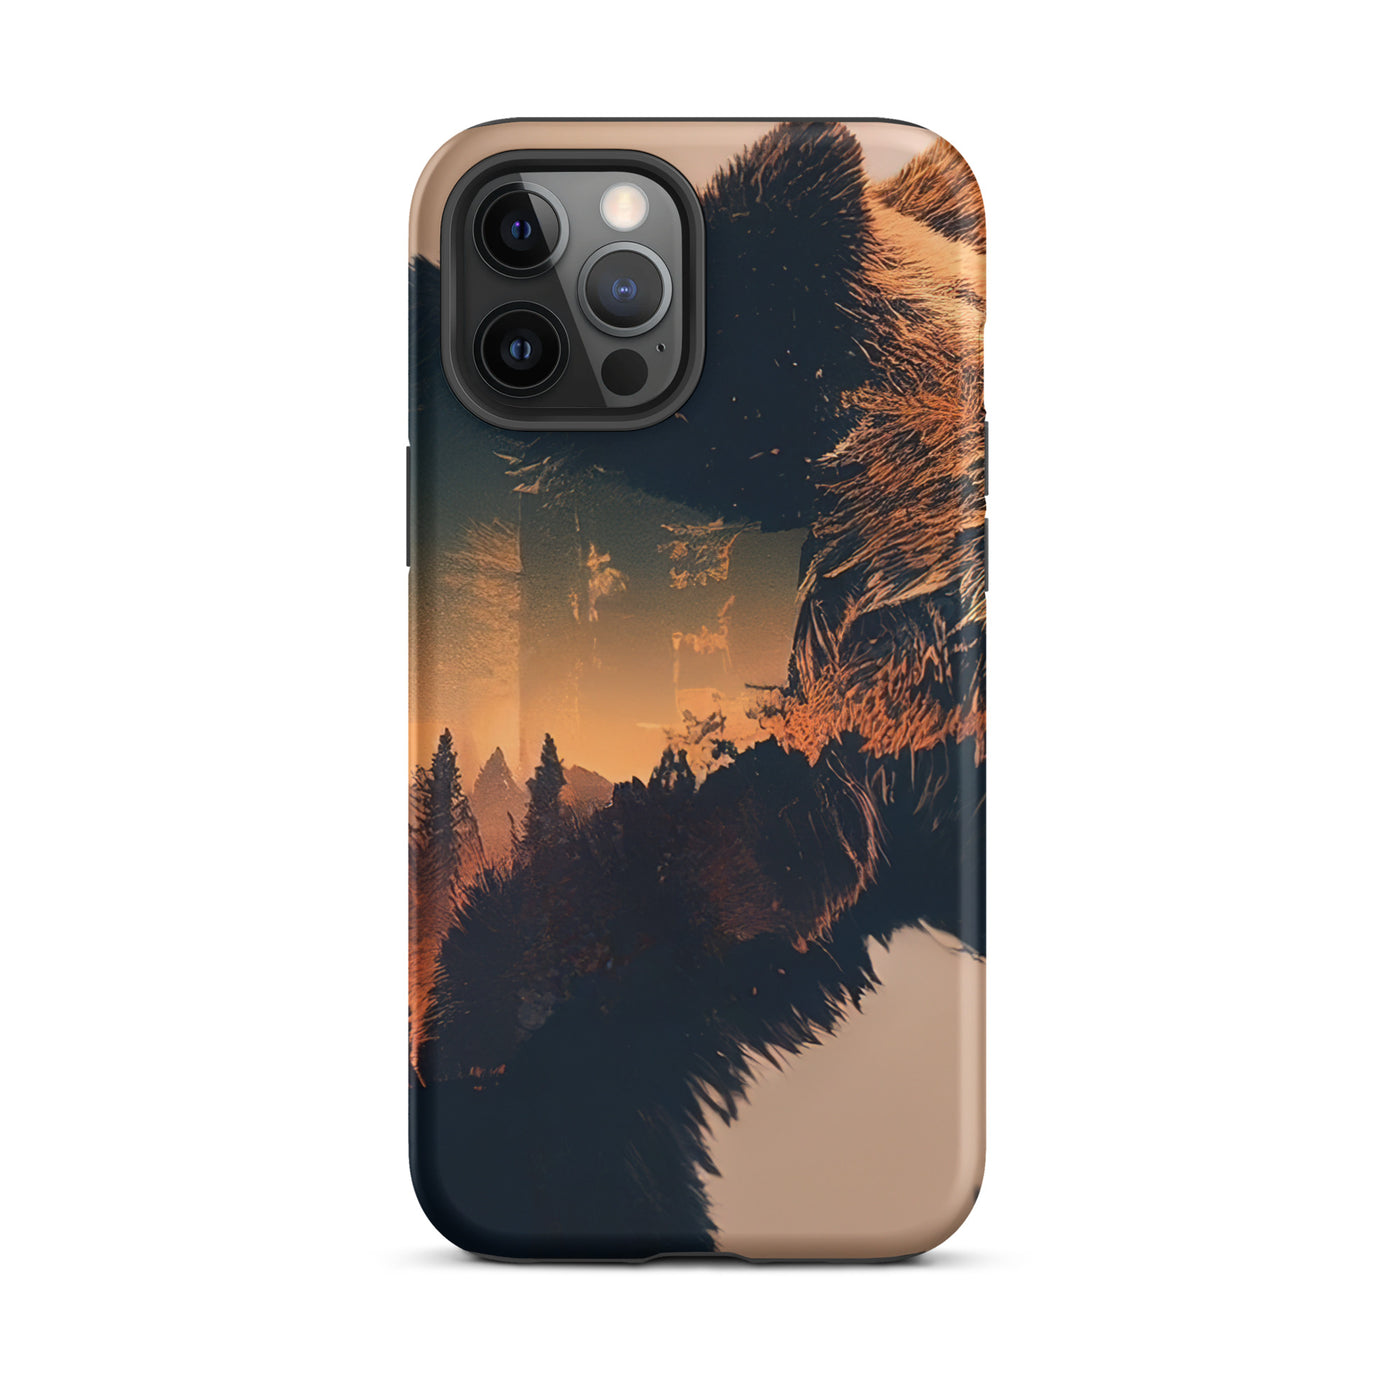 Bär und Bäume Illustration - iPhone Schutzhülle (robust) camping xxx iPhone 12 Pro Max